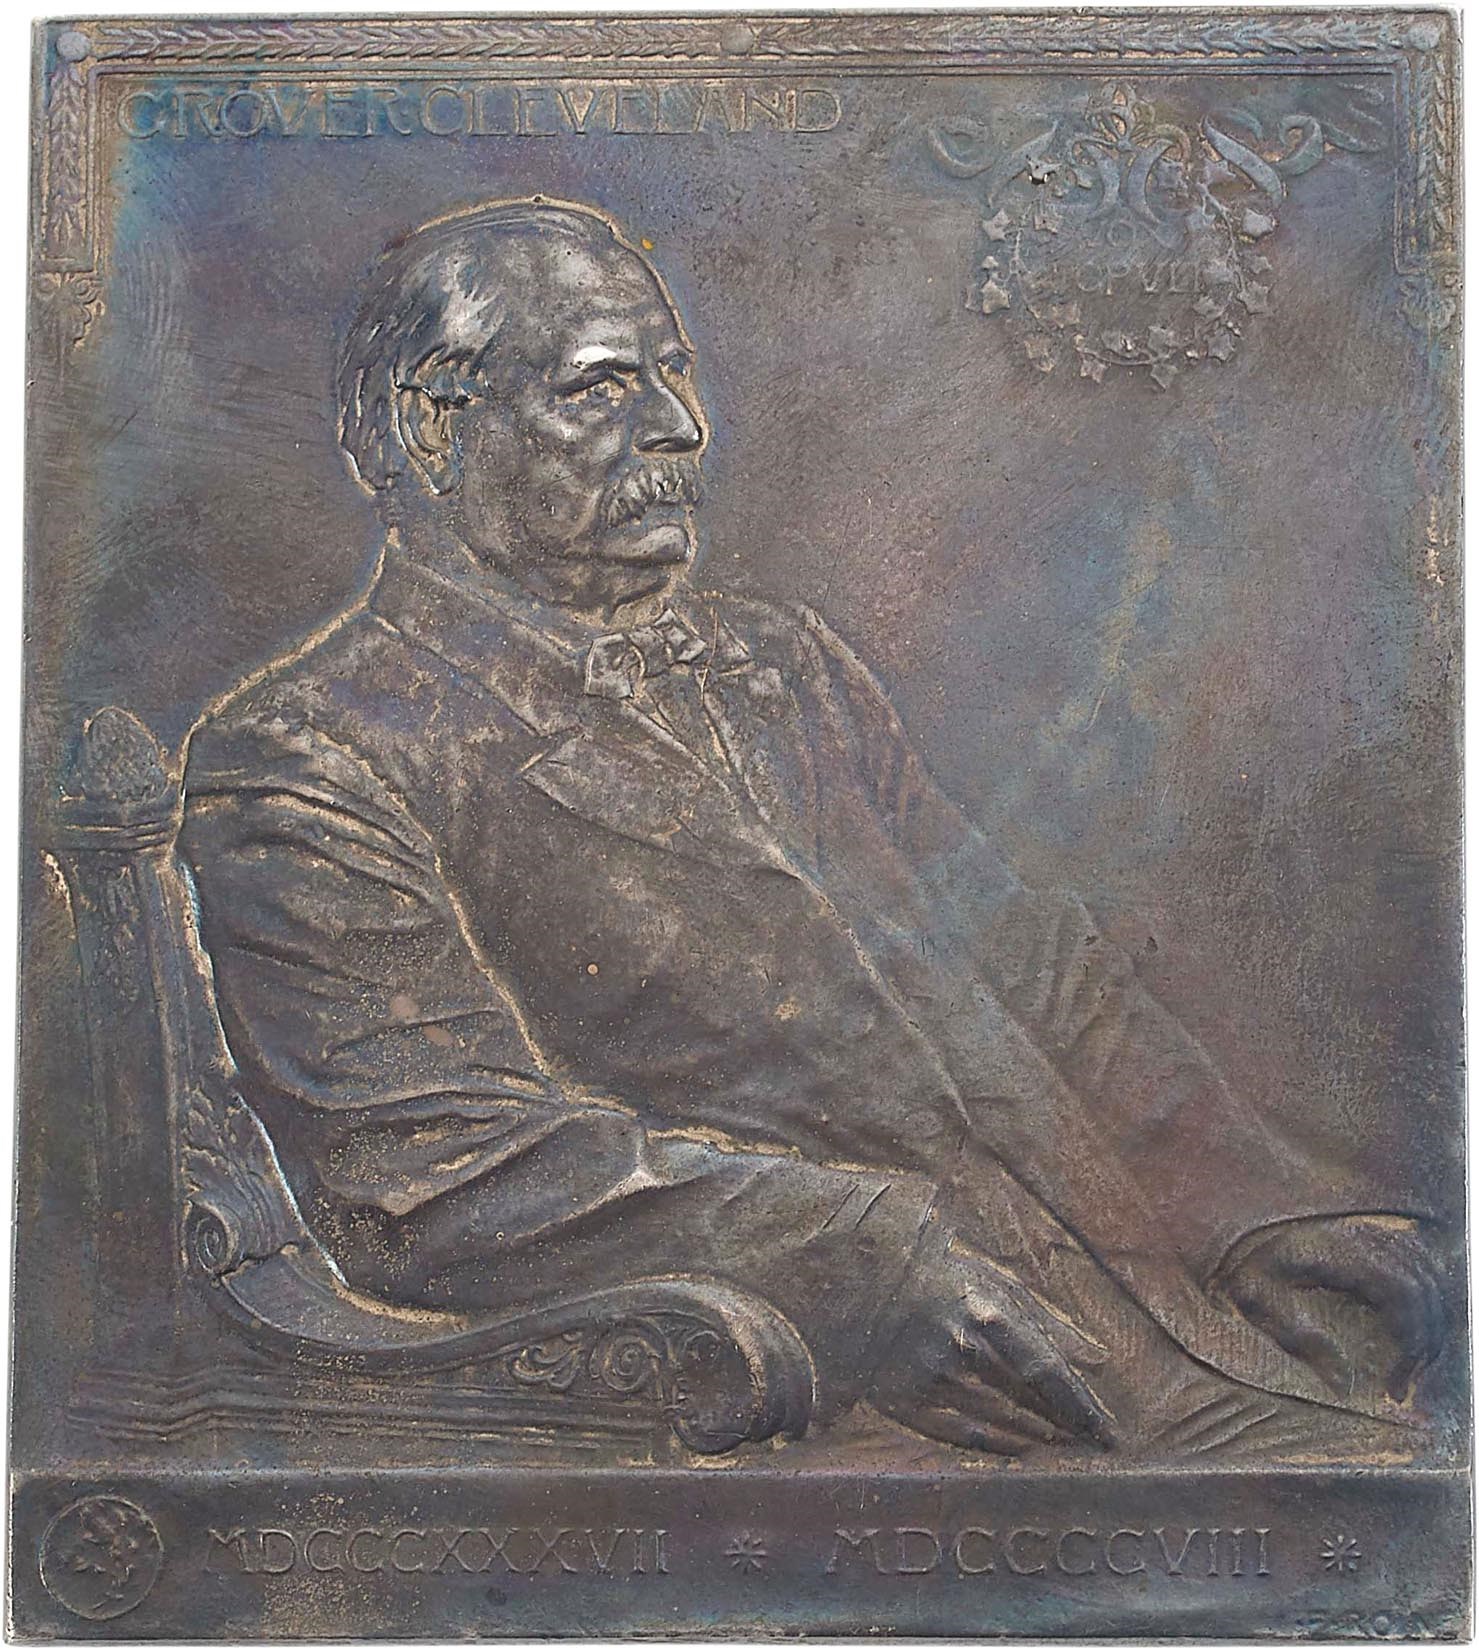 1908 Grover Cleveland Vox Populi Medallic Plaque